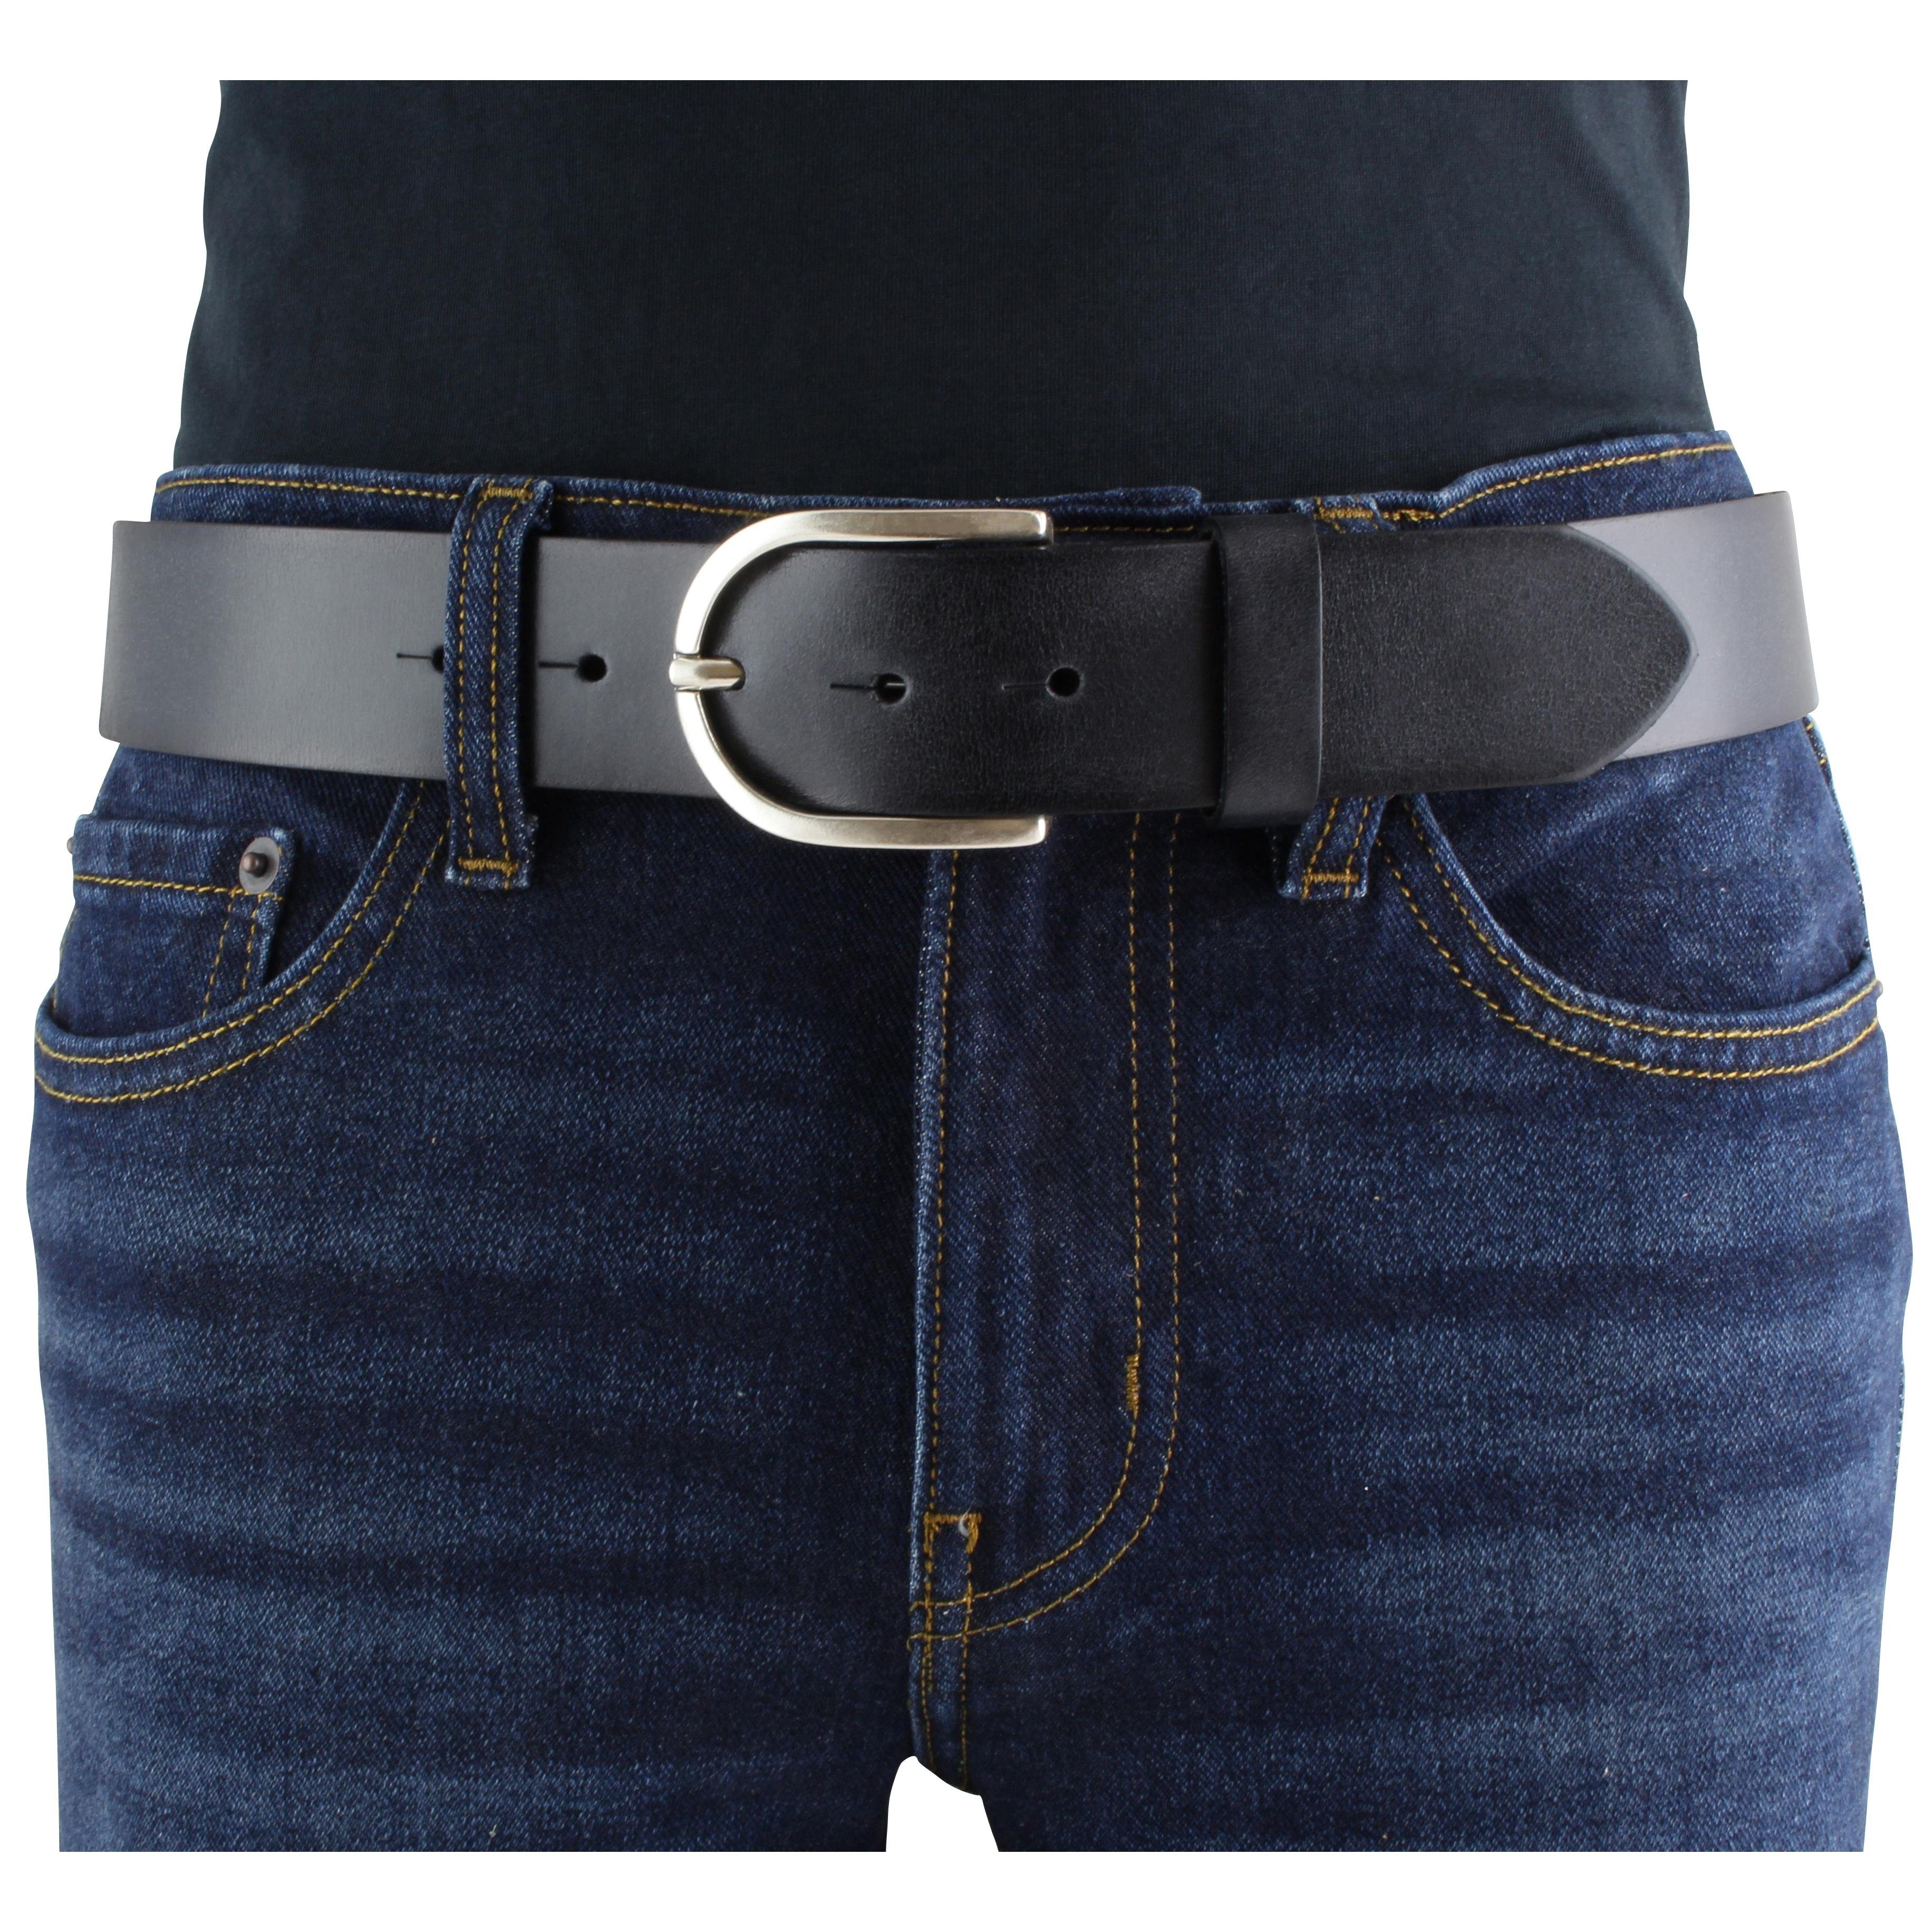 4 cm Jeans-Gürtel Ledergürtel Schwarz, - Altsilber Da für Damen-Gürtel Vintage-Look Vollrindleder aus BELTINGER